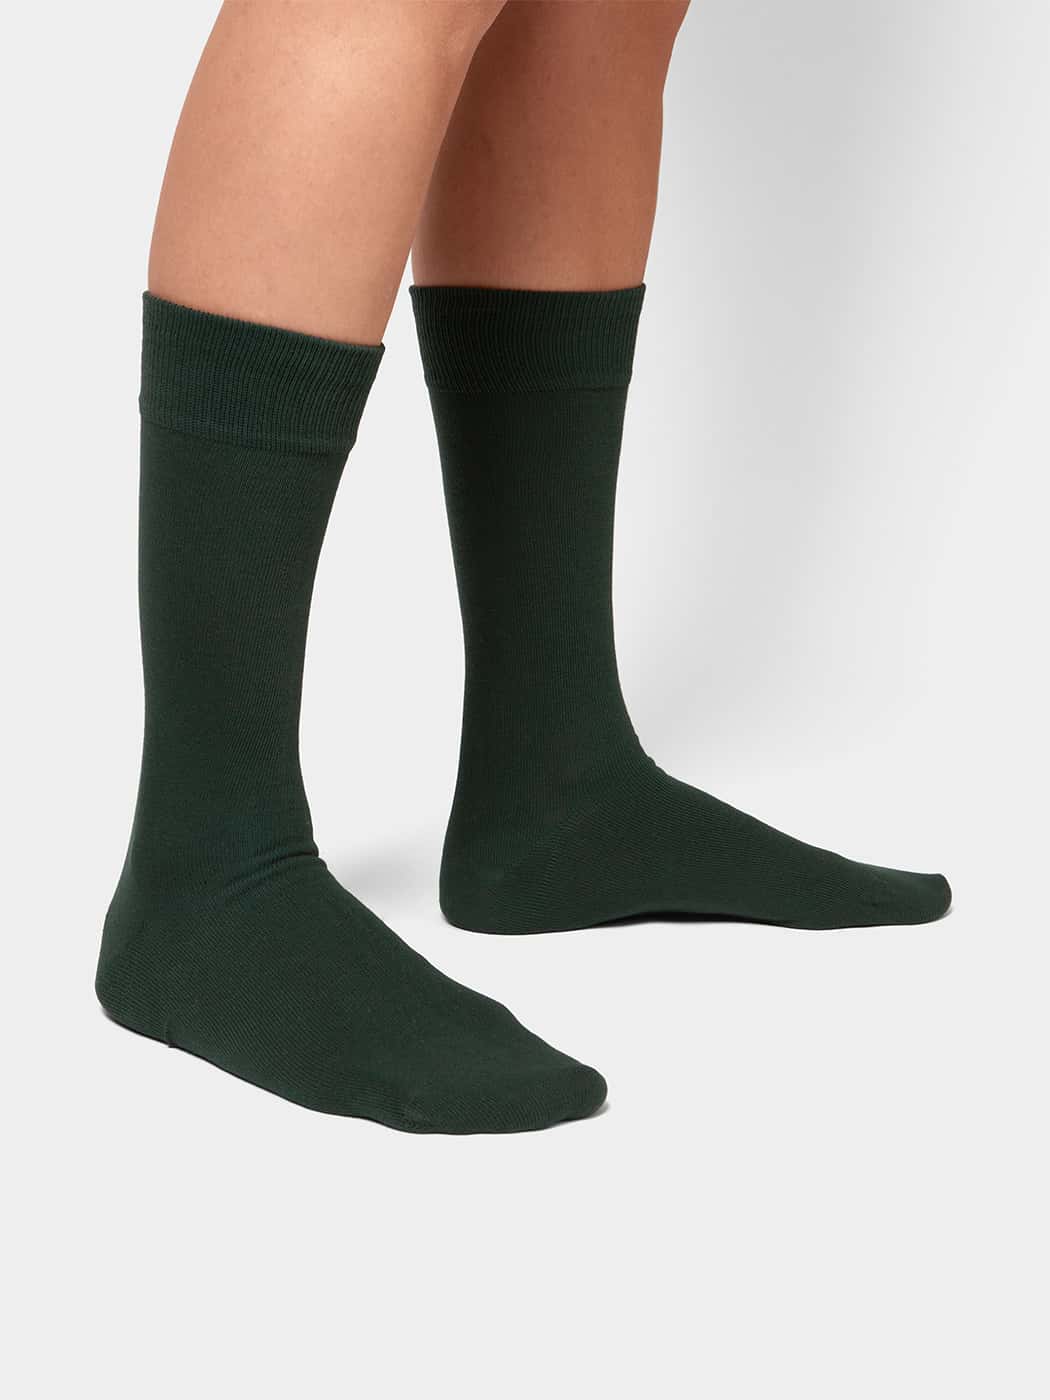 Pack of 3 pairs of plain green socks